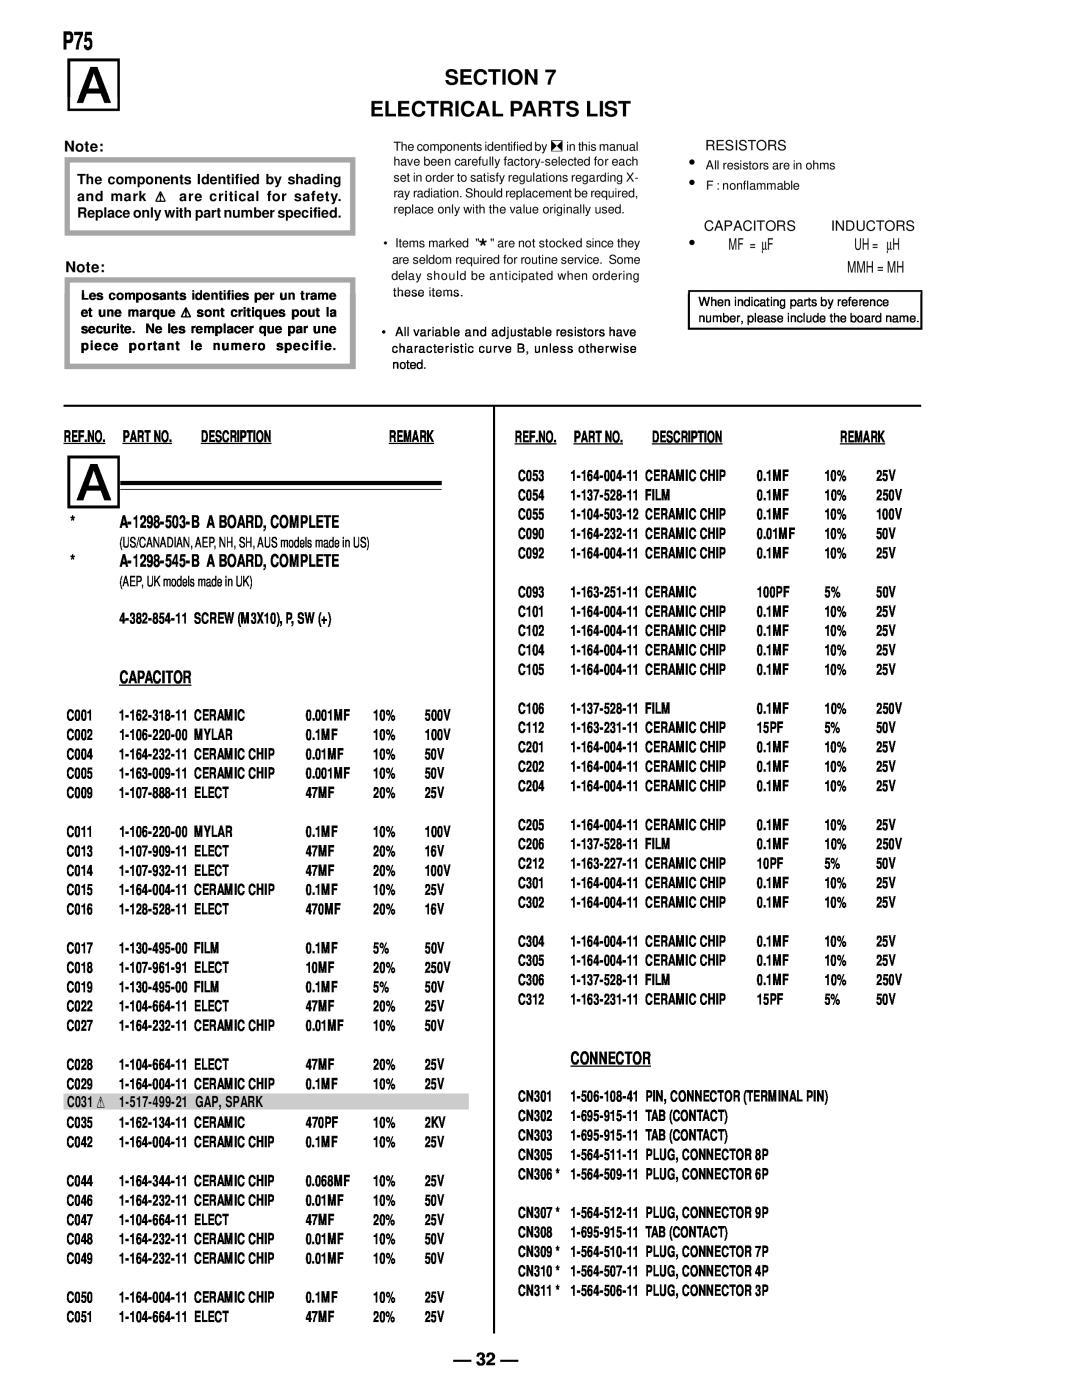 Compaq D-1H Section Electrical Parts List, A-1298-503-B A BOARD, COMPLETE, A-1298-545-B A BOARD, COMPLETE, Capacitor 